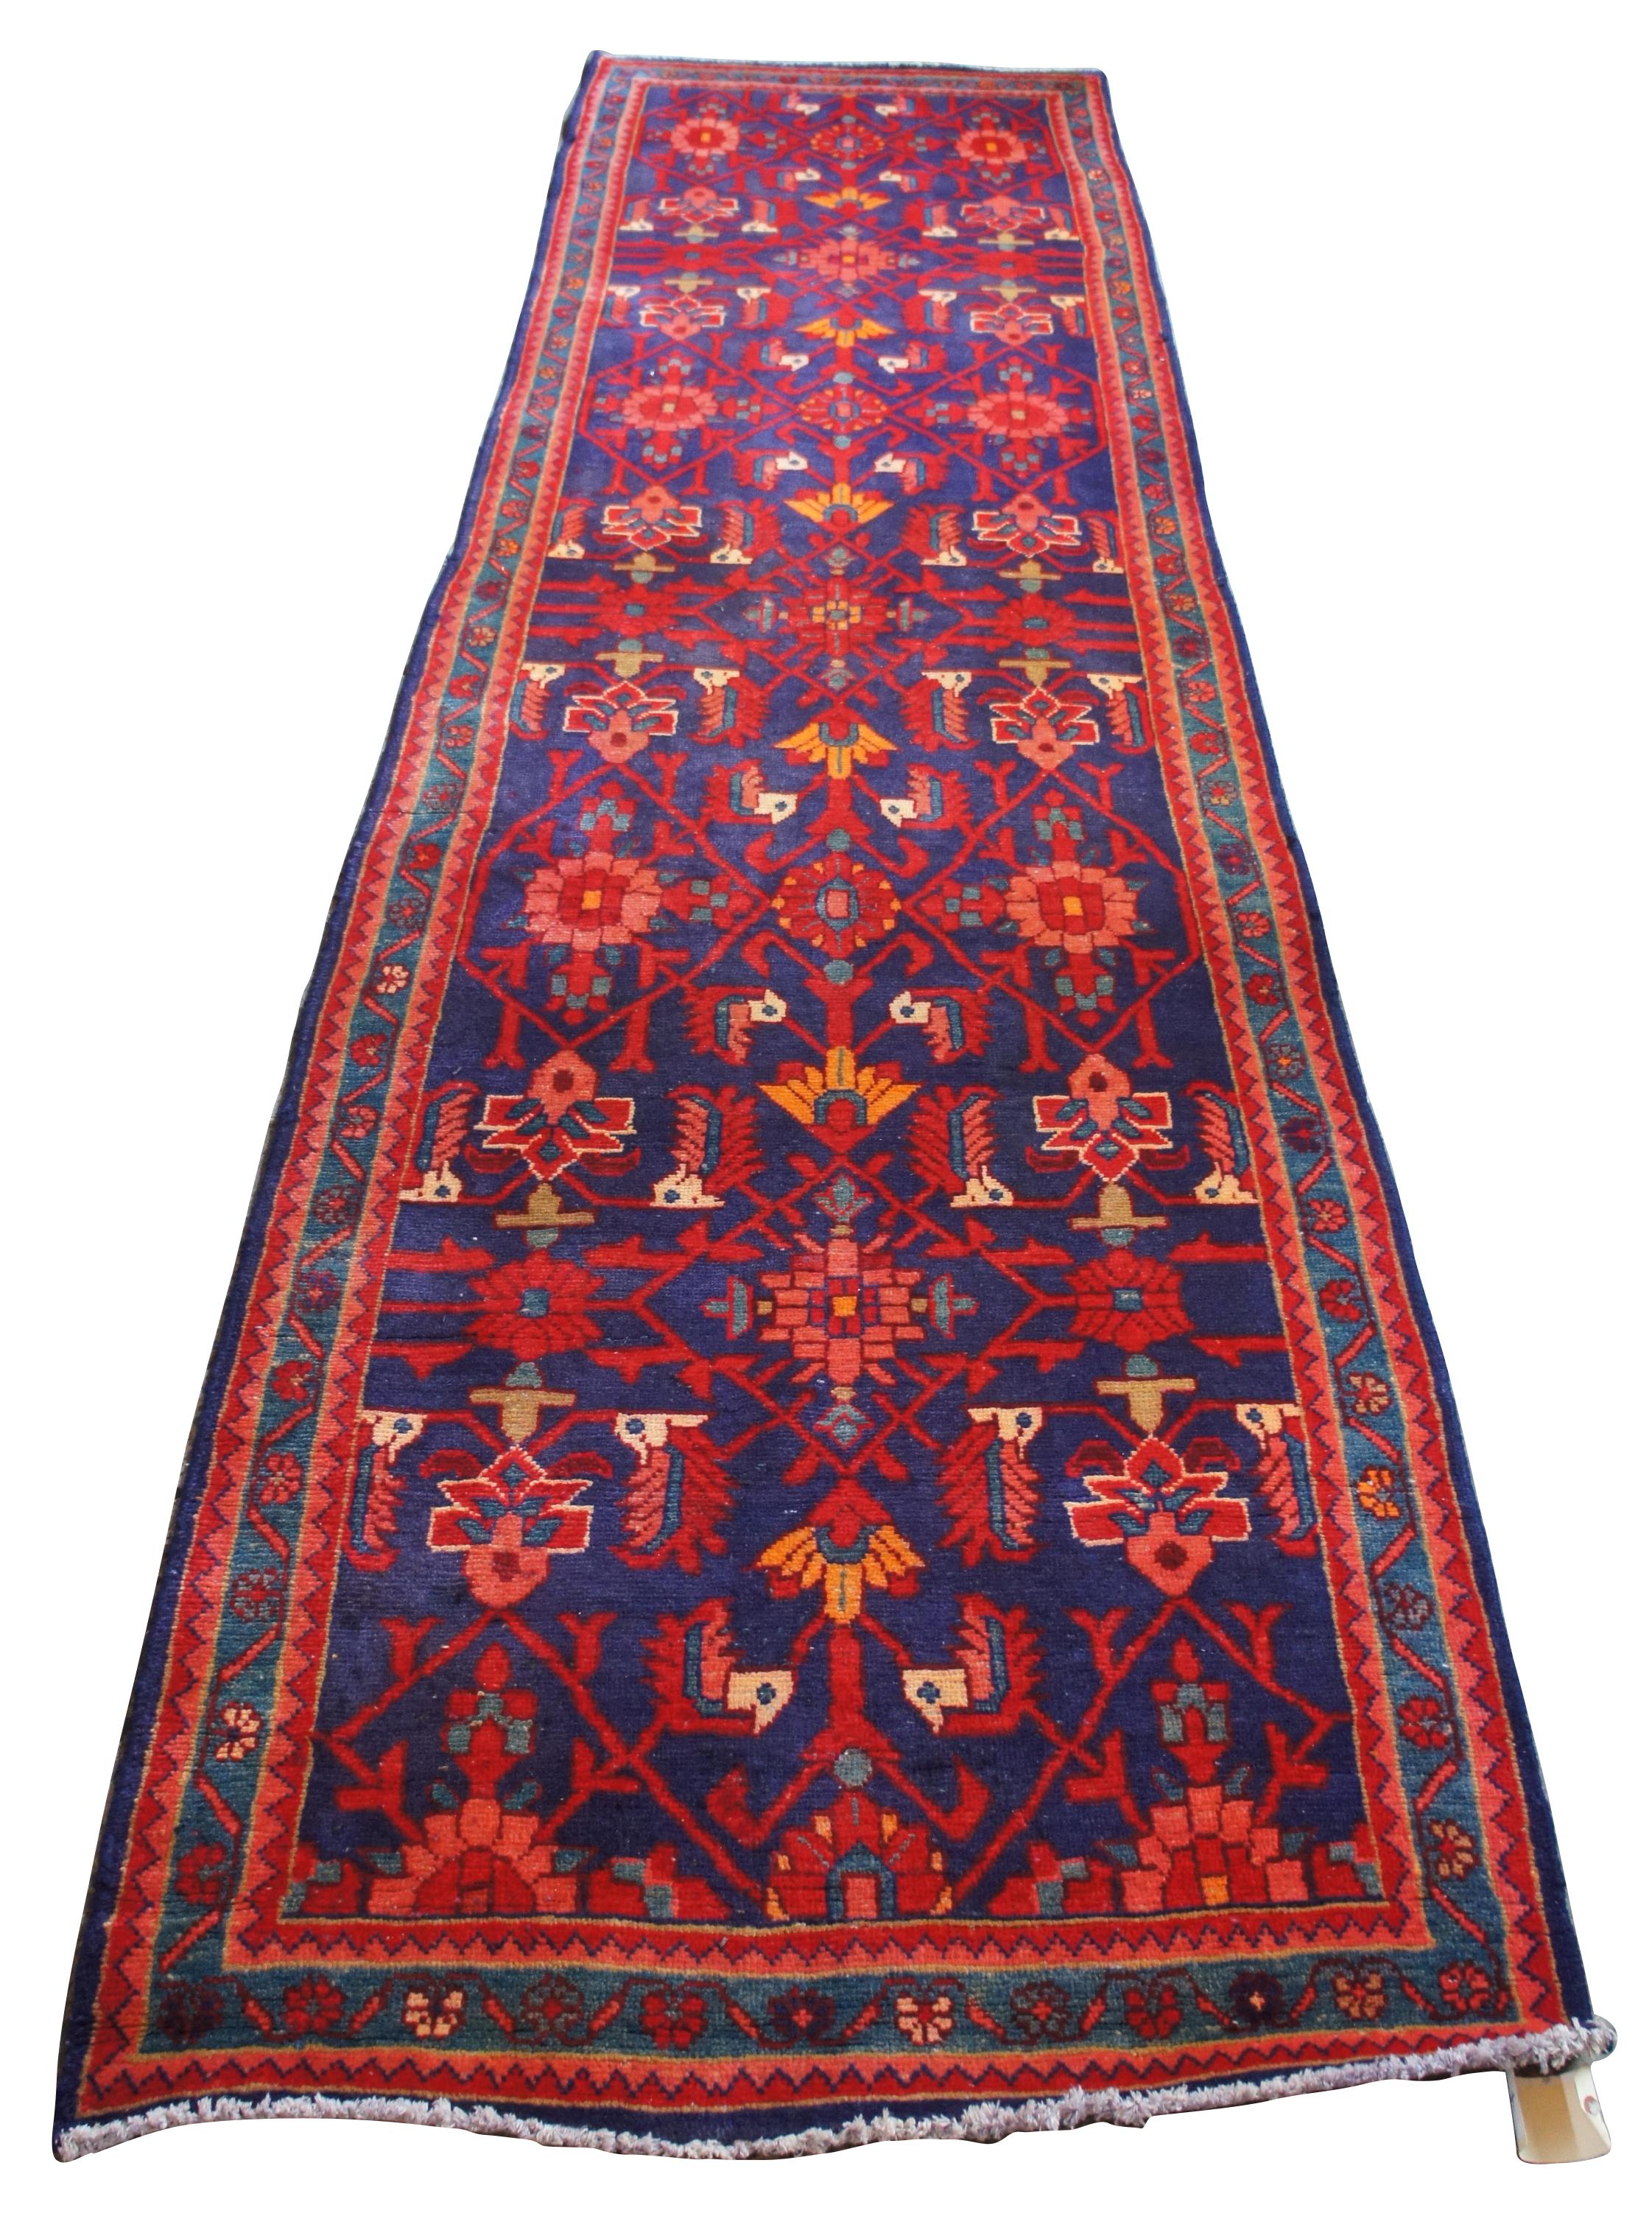 Vintage Persian hand knotted Saveh Geometric wool rug runner carpet mat 167